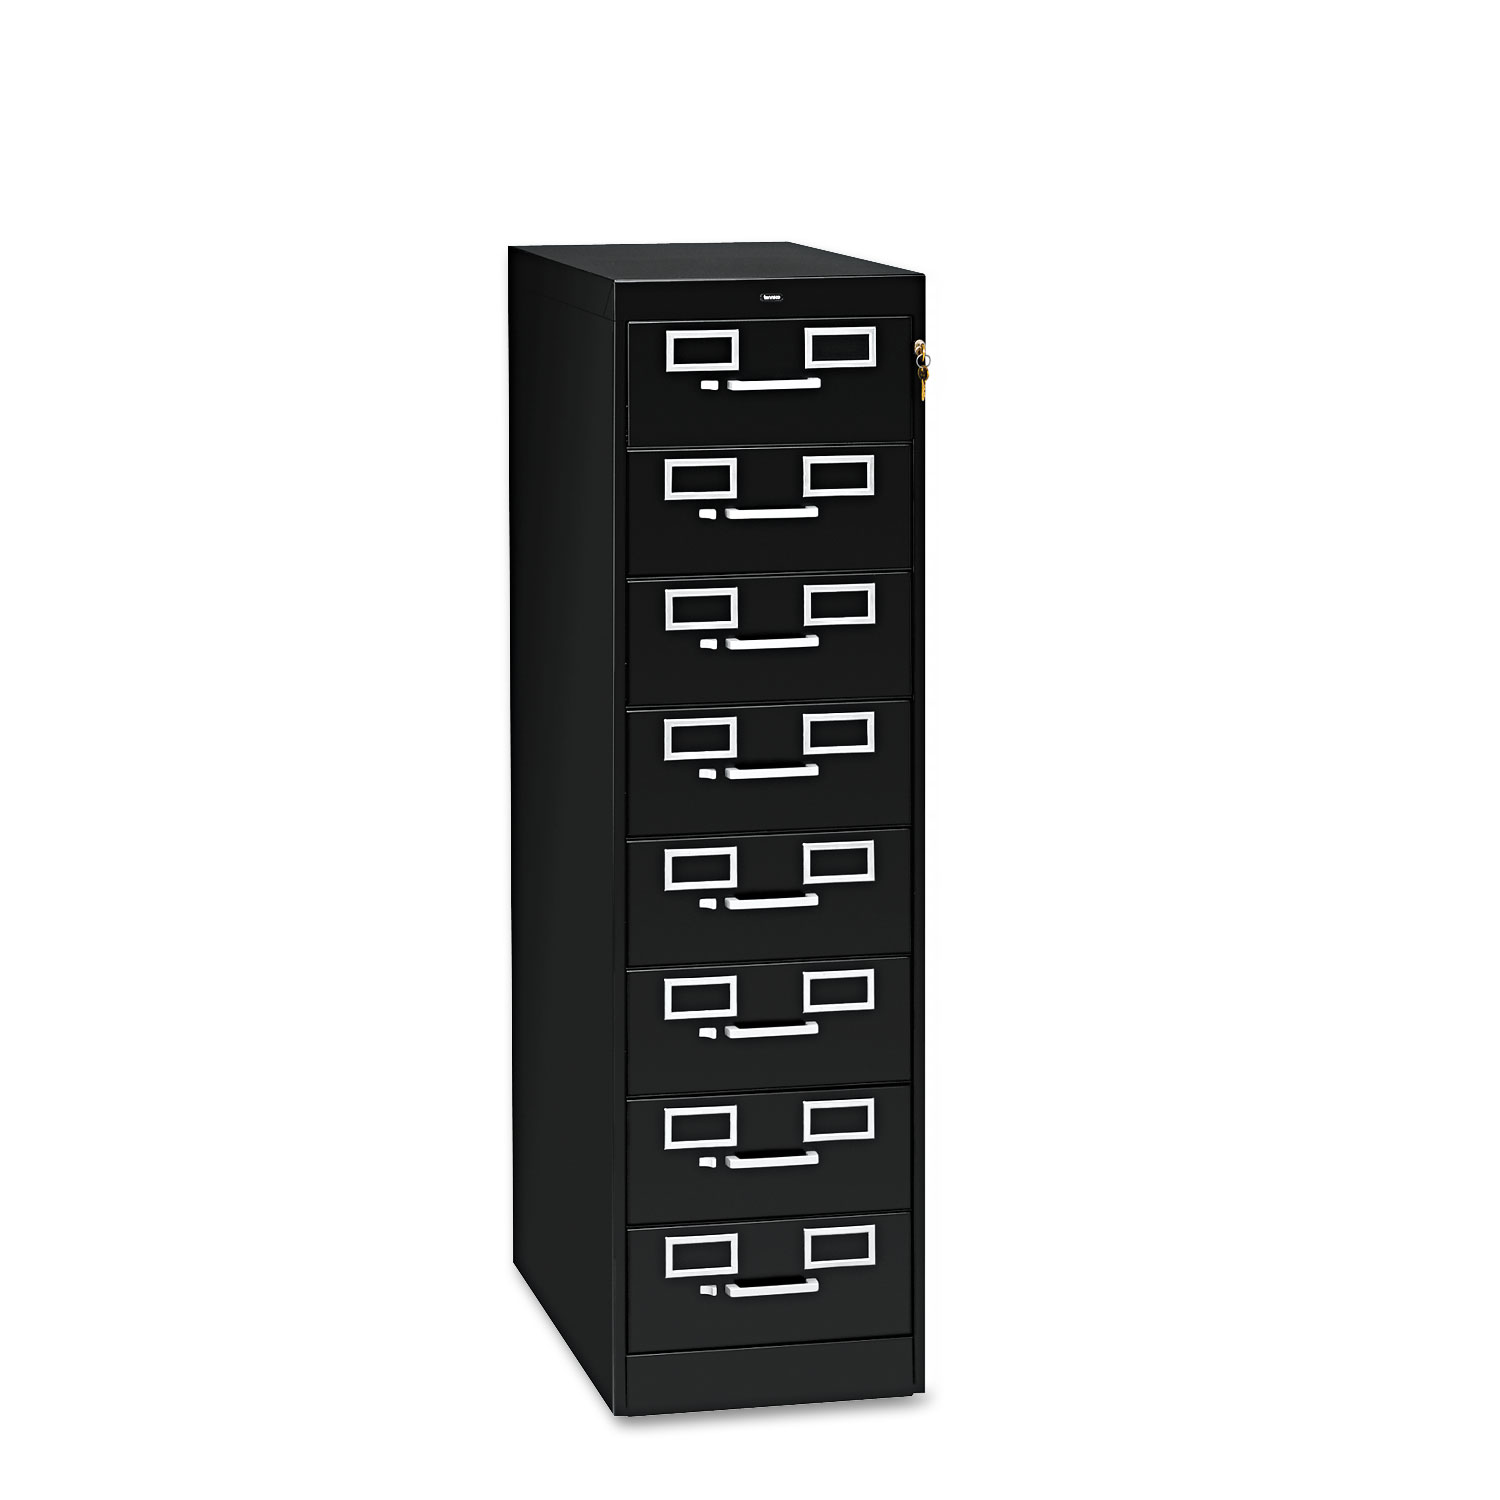  Tennsco CF-846BK Eight-Drawer File Cabinet for 3 x 5 & 4 x 6 Cards, 15w x 28.5d x 52h, Black (TNNCF846BK) 